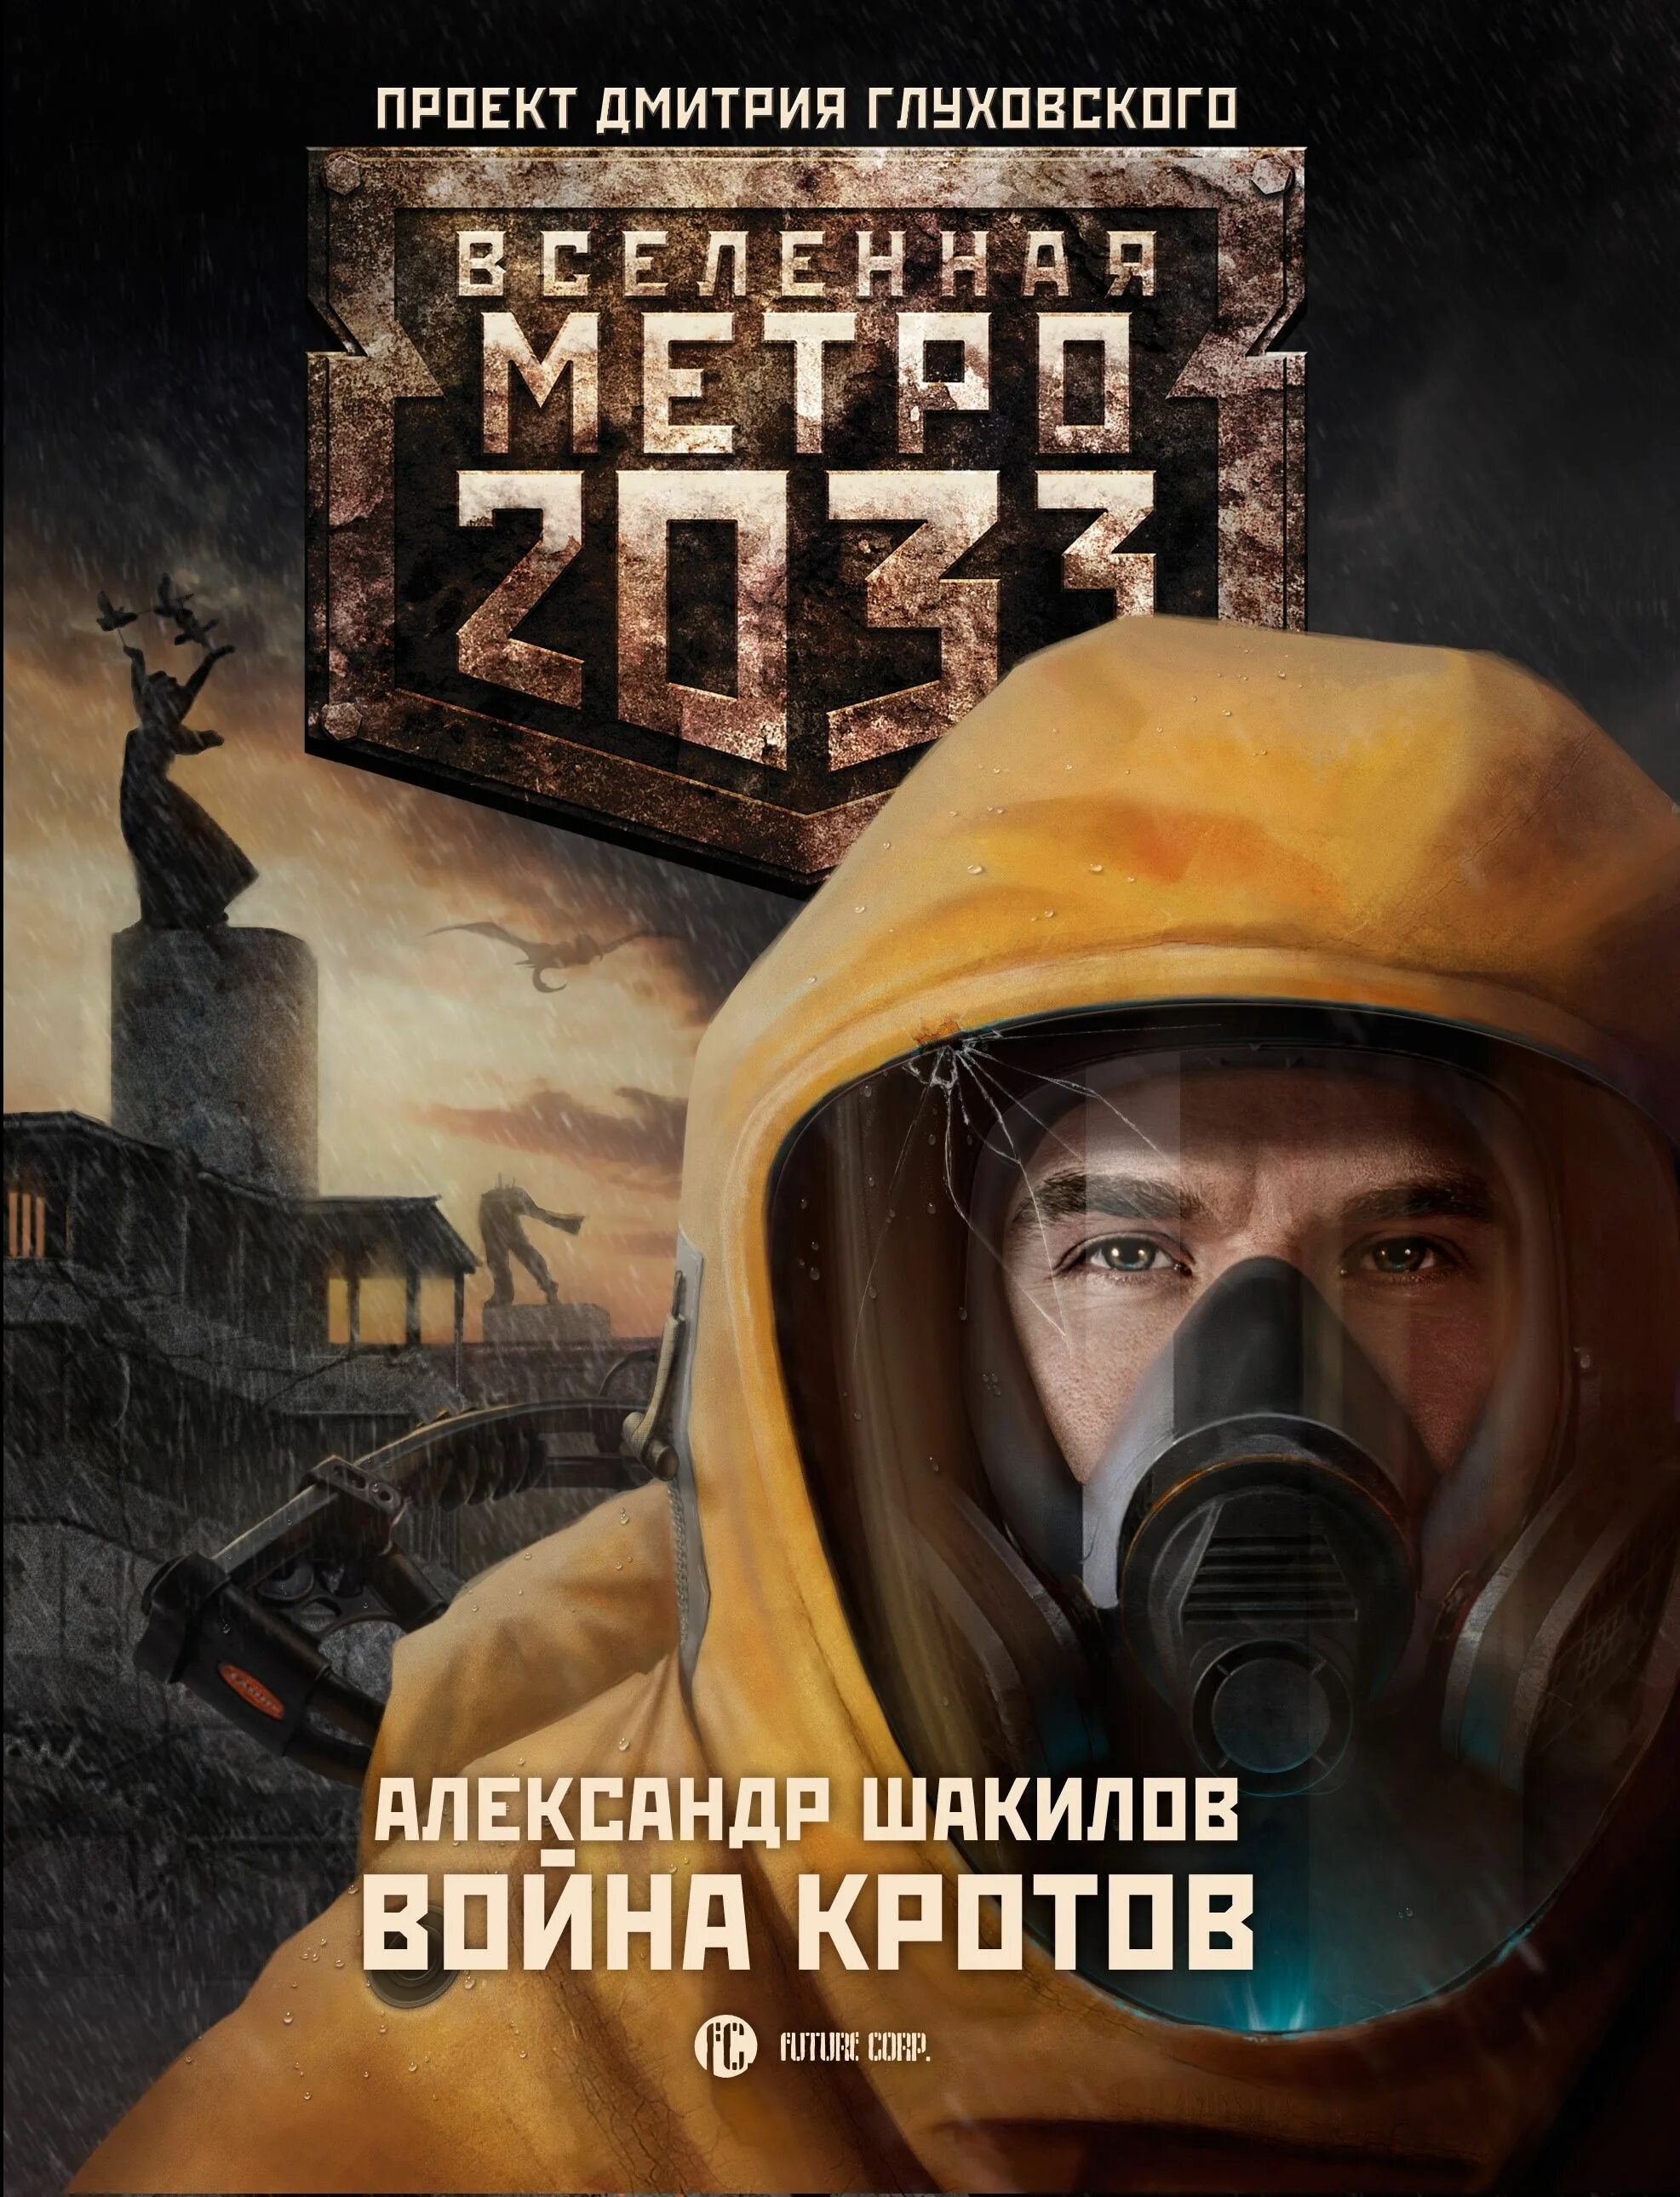 Вселенная метро 2033 Шимун Врочек. Вселенная метро 2033 проект Дмитрия Глуховского.